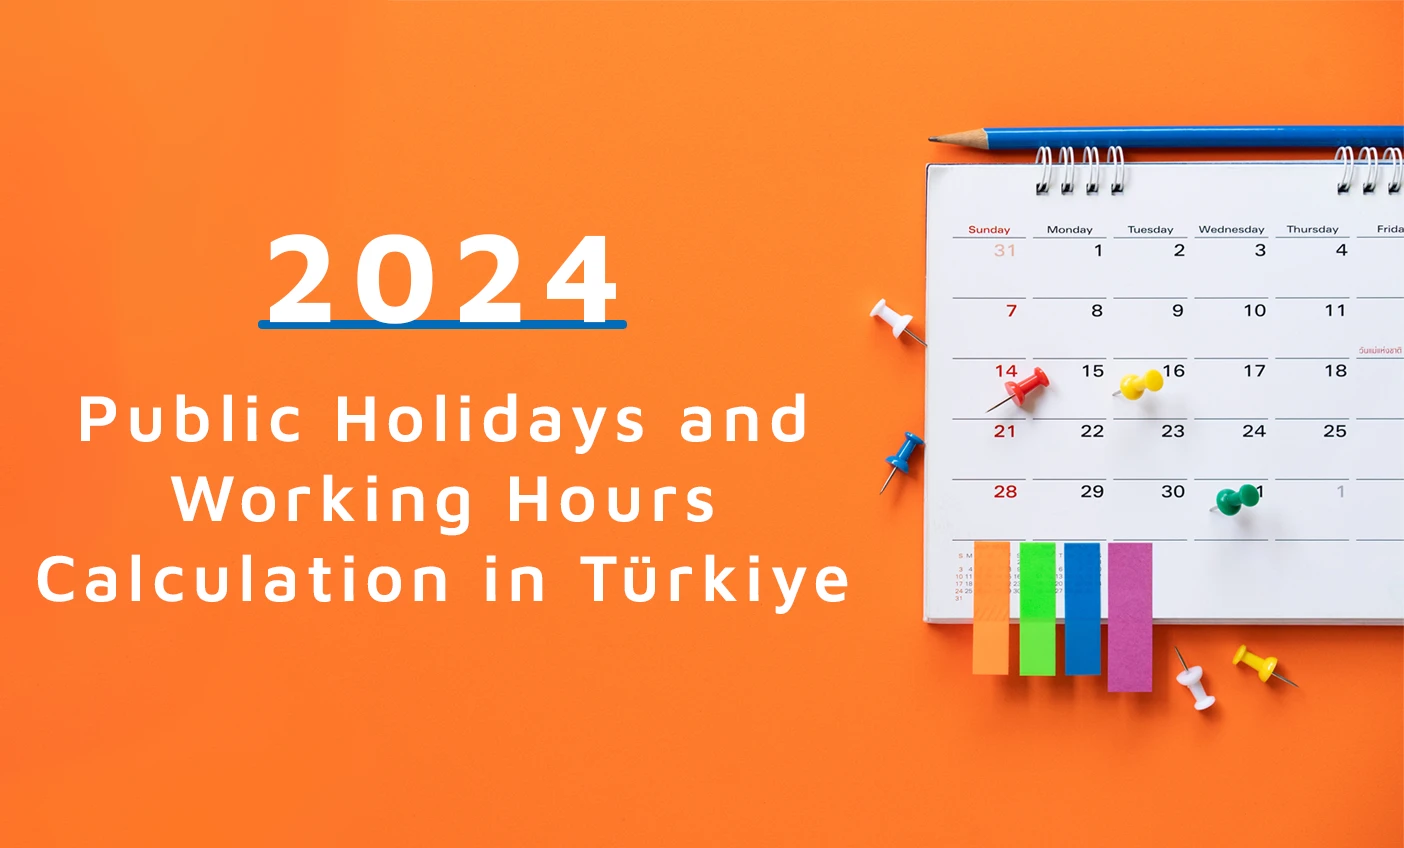 2024 Public Holidays and Working Hours Calculation in Türkiye